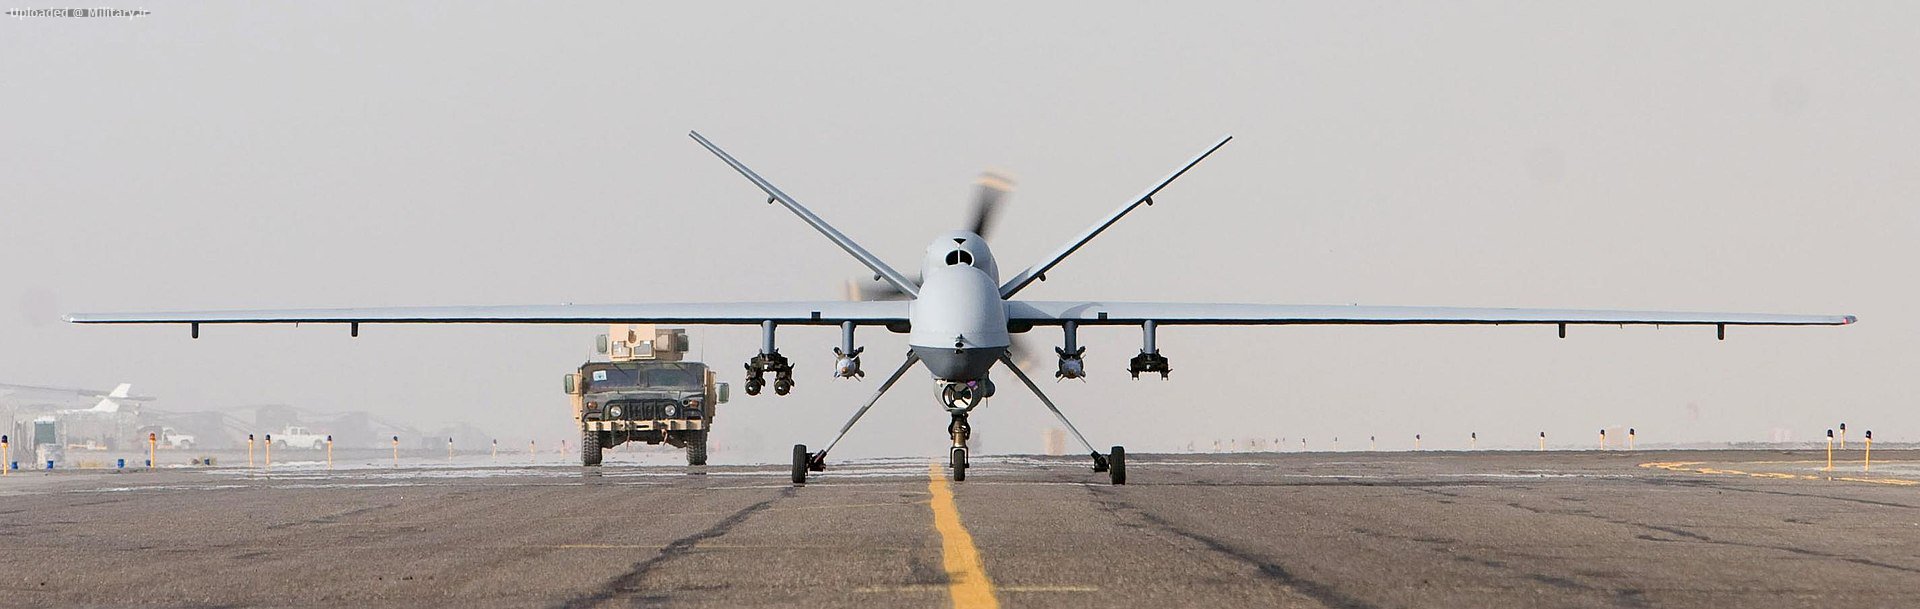 MQ-9_Afghanistan_takeoff.JPG